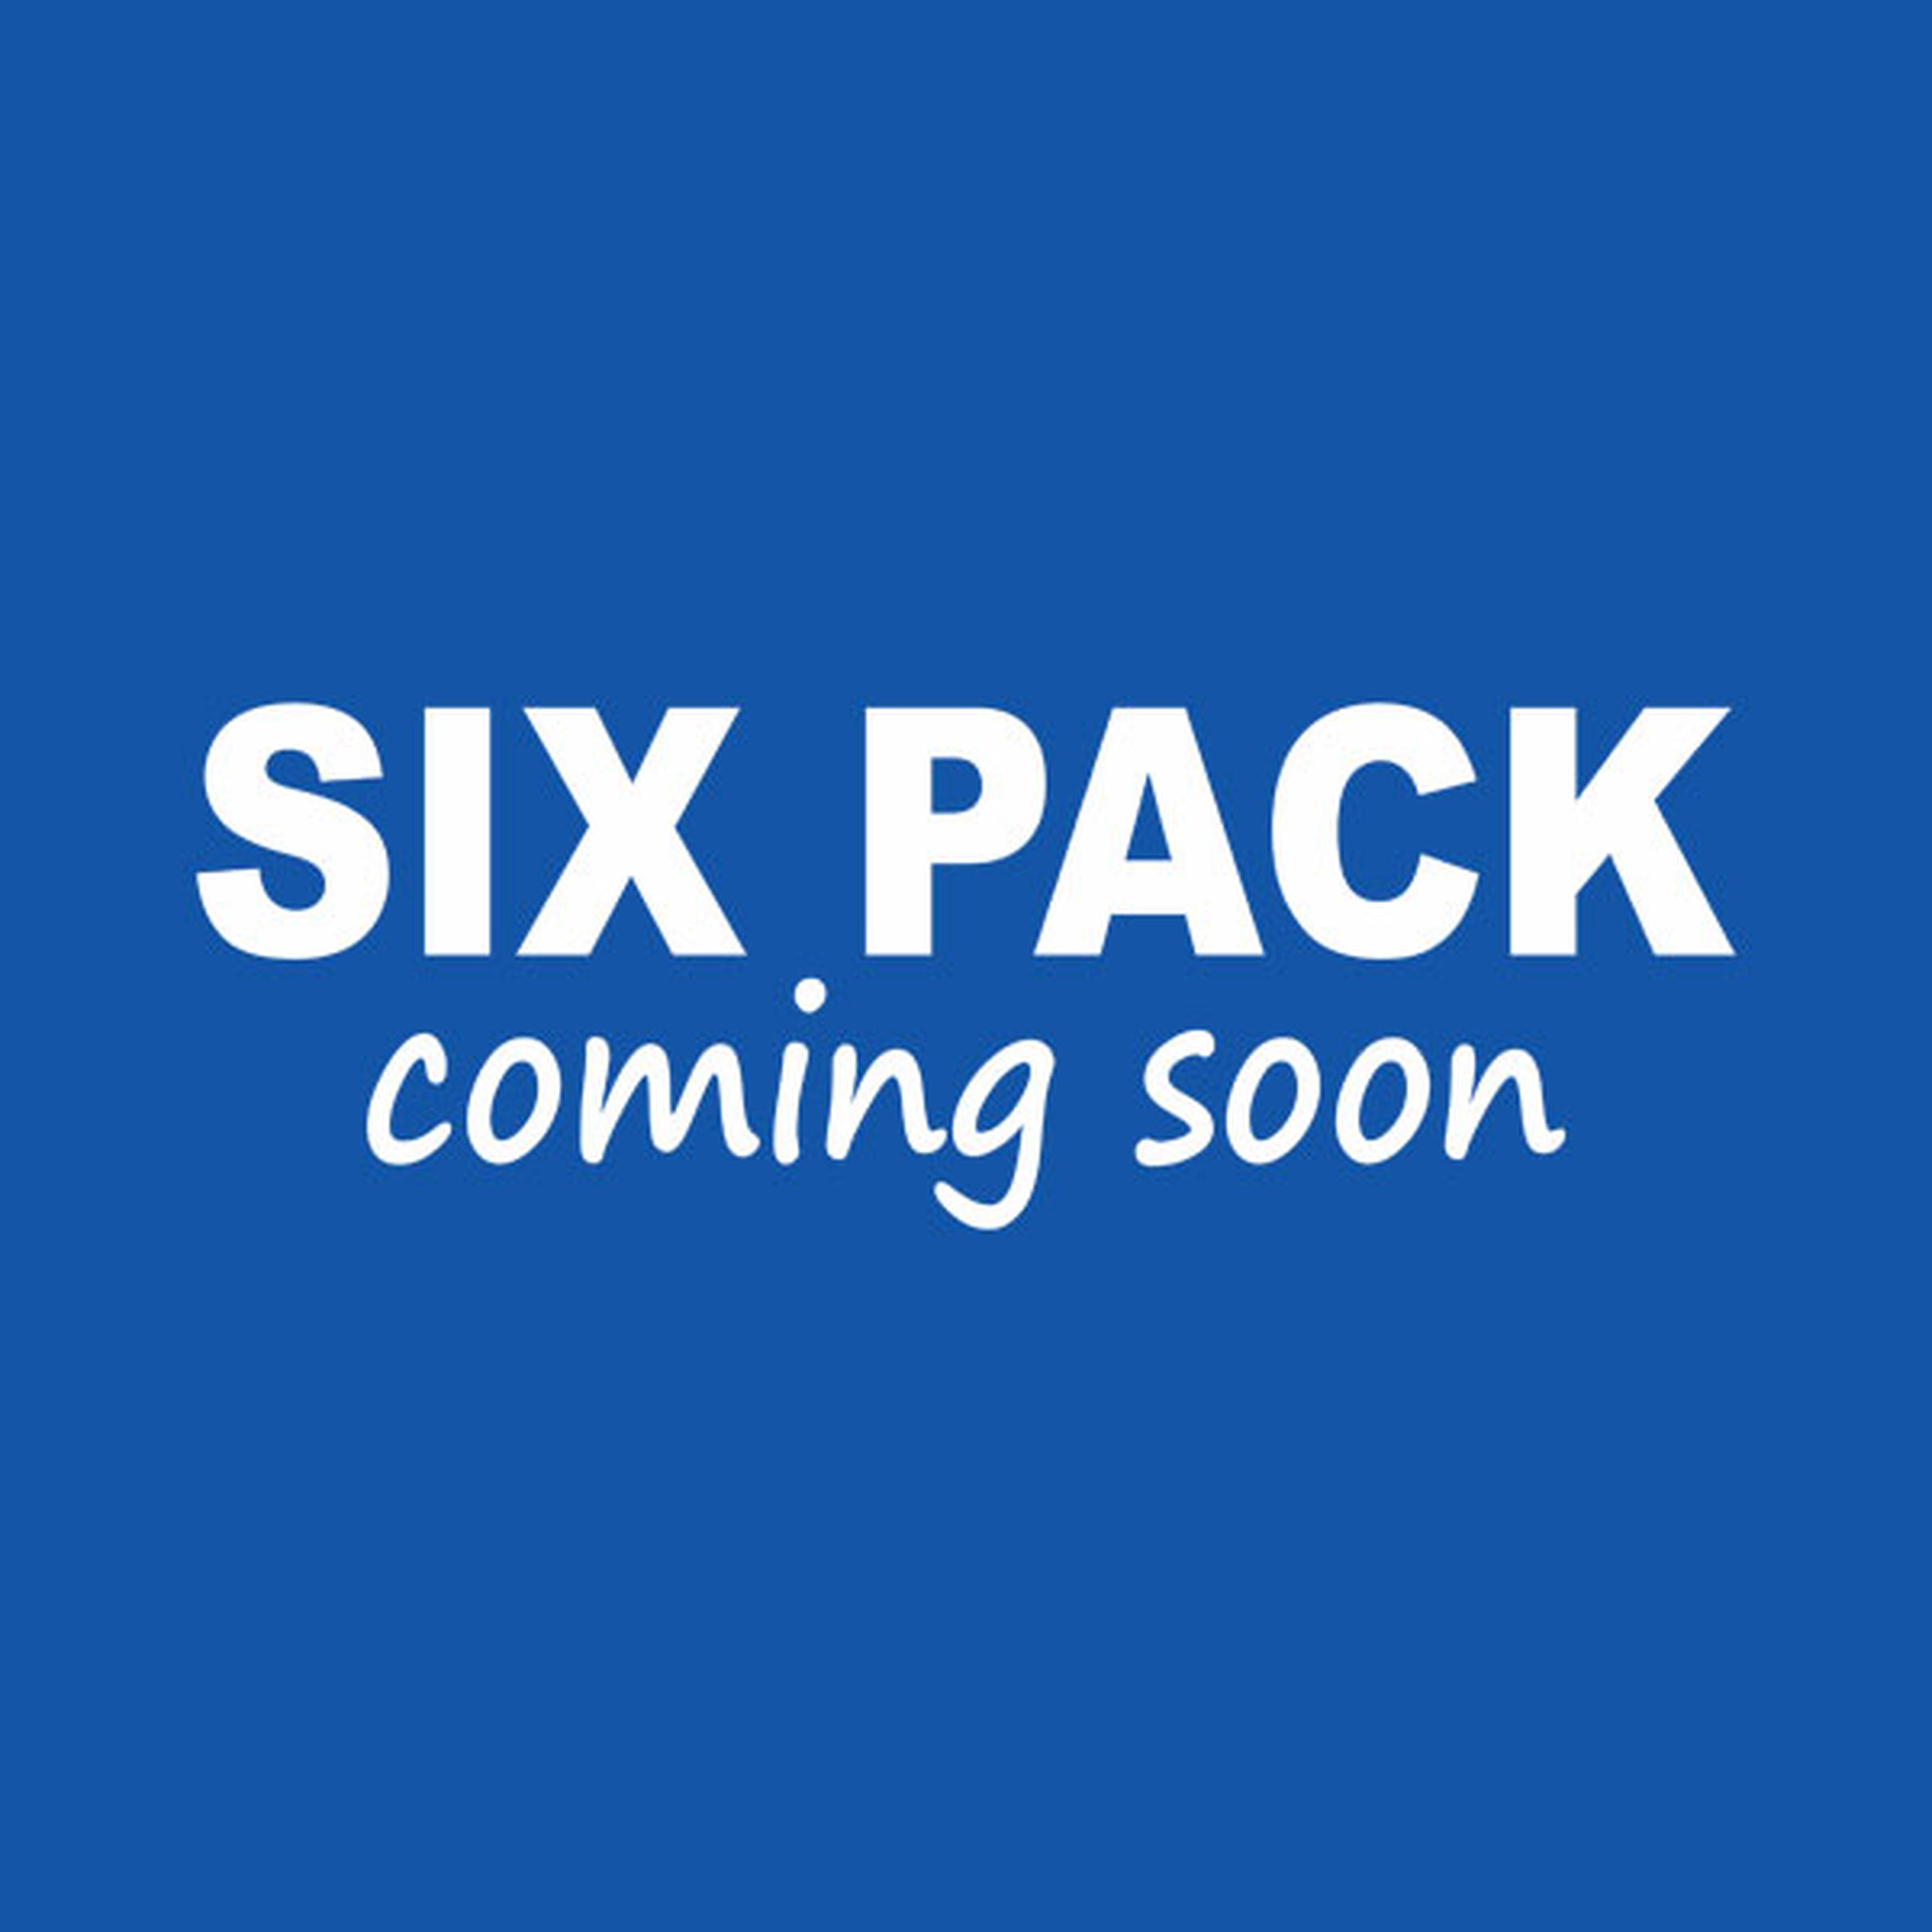 SIX PACK. Coming soon. - T-shirt